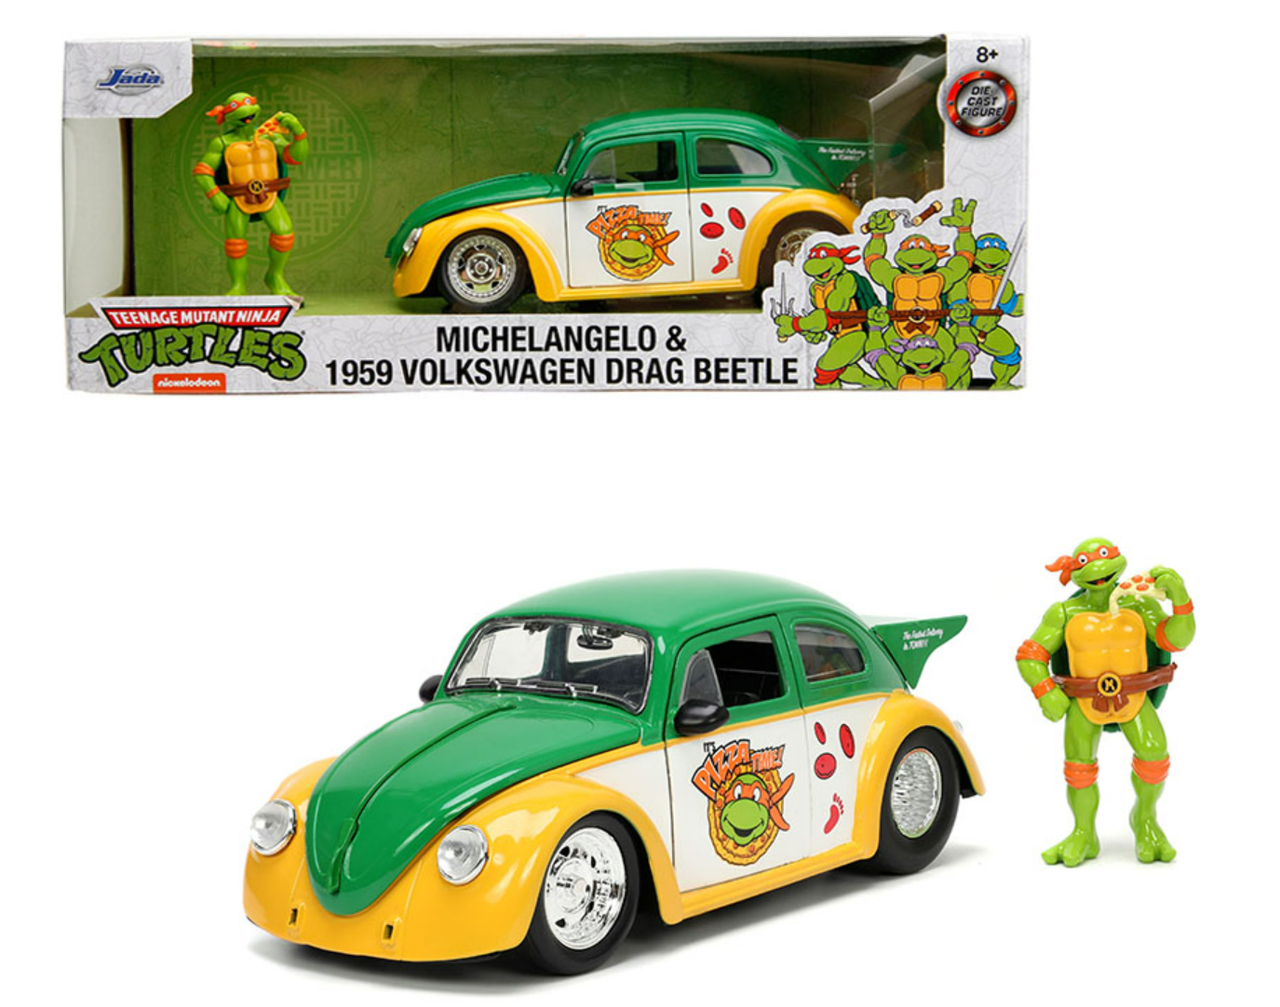 1/24 Jada 1959 Volkswagen Drag Beetle with Michelangelo Figure Teenage Mutant Ninja Turtles (TMNT)